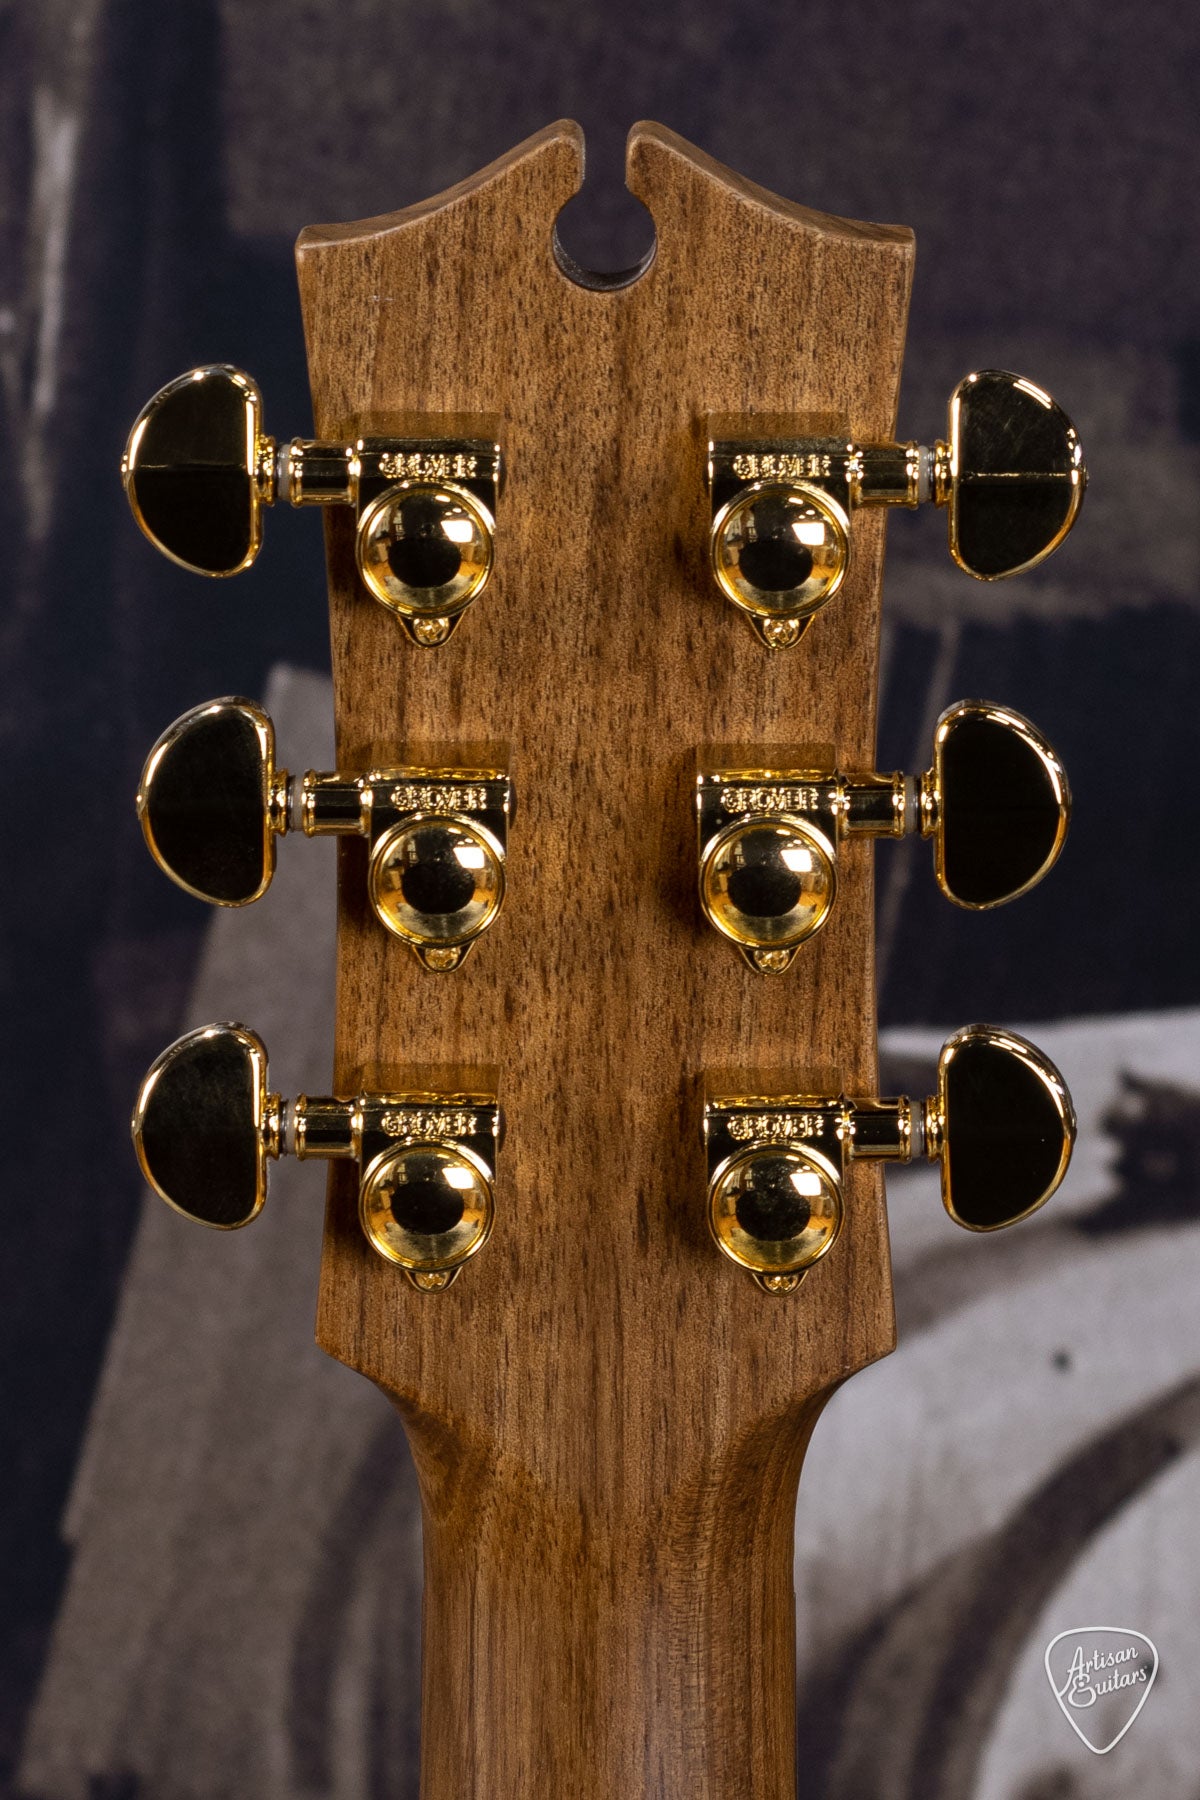 Maton Guitars EA808 Australian - 16244